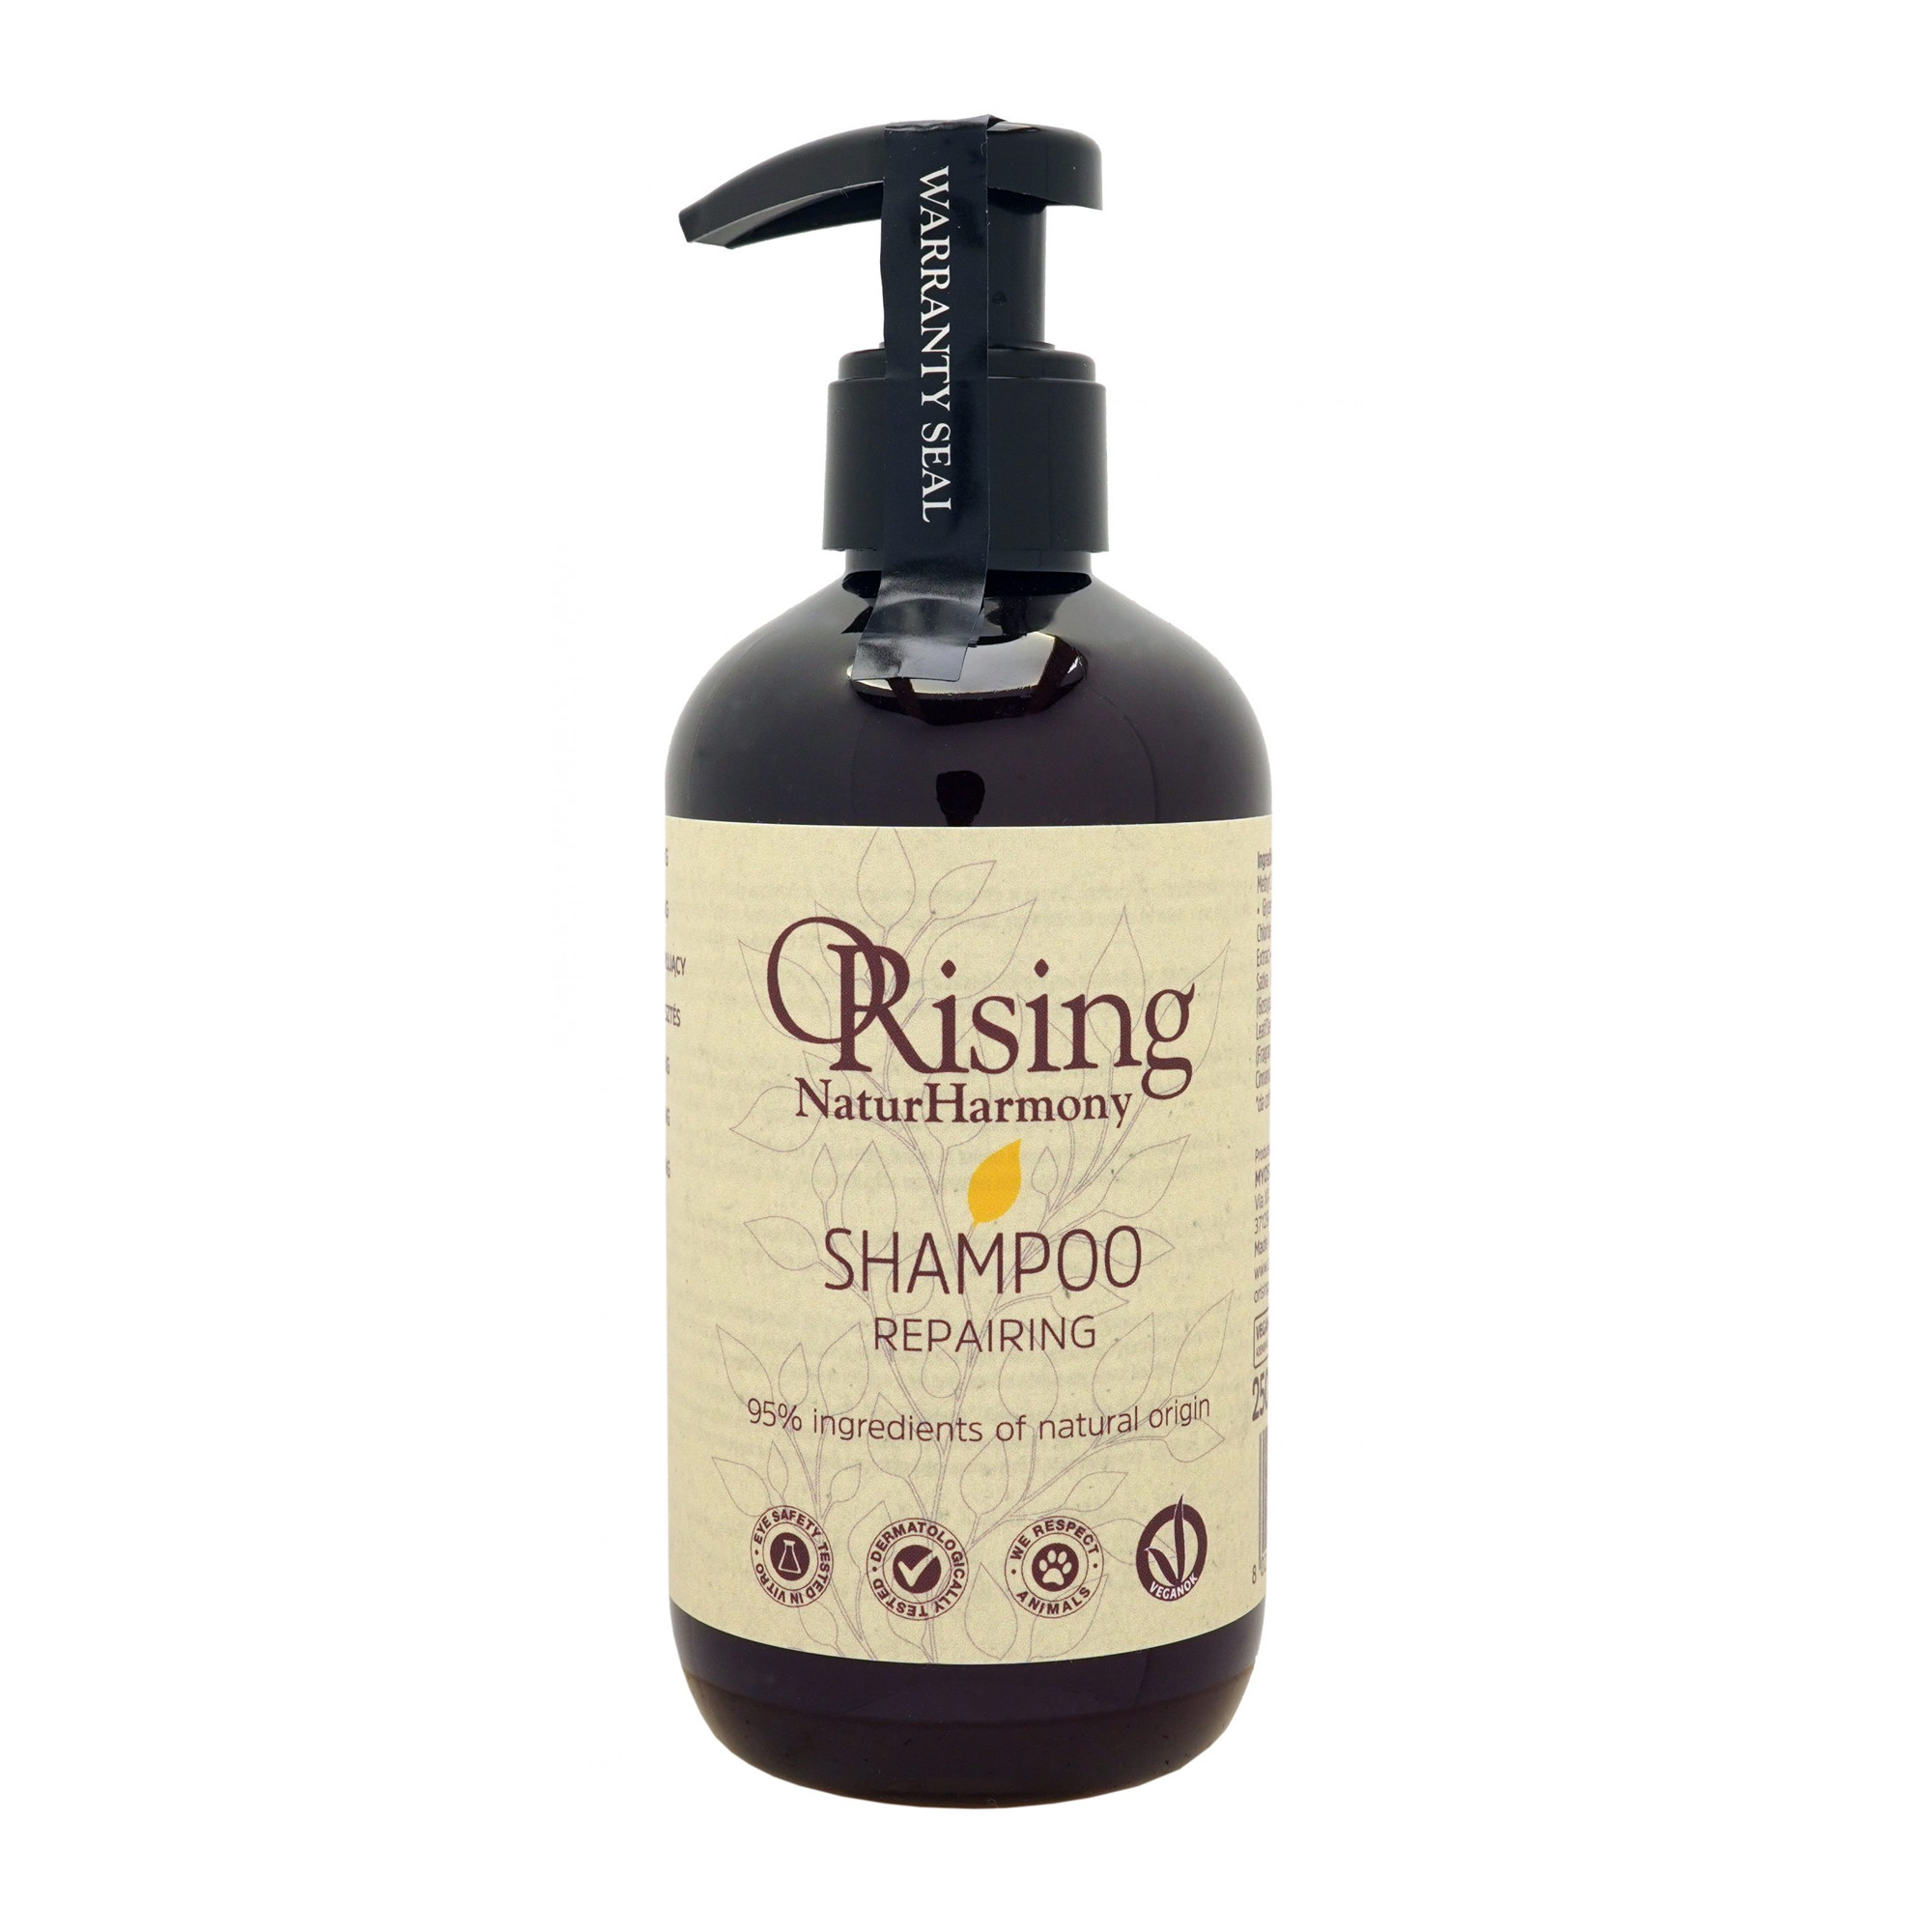 Orising Natur Harmony Shampoo Repairing - Відновлюючий шампунь